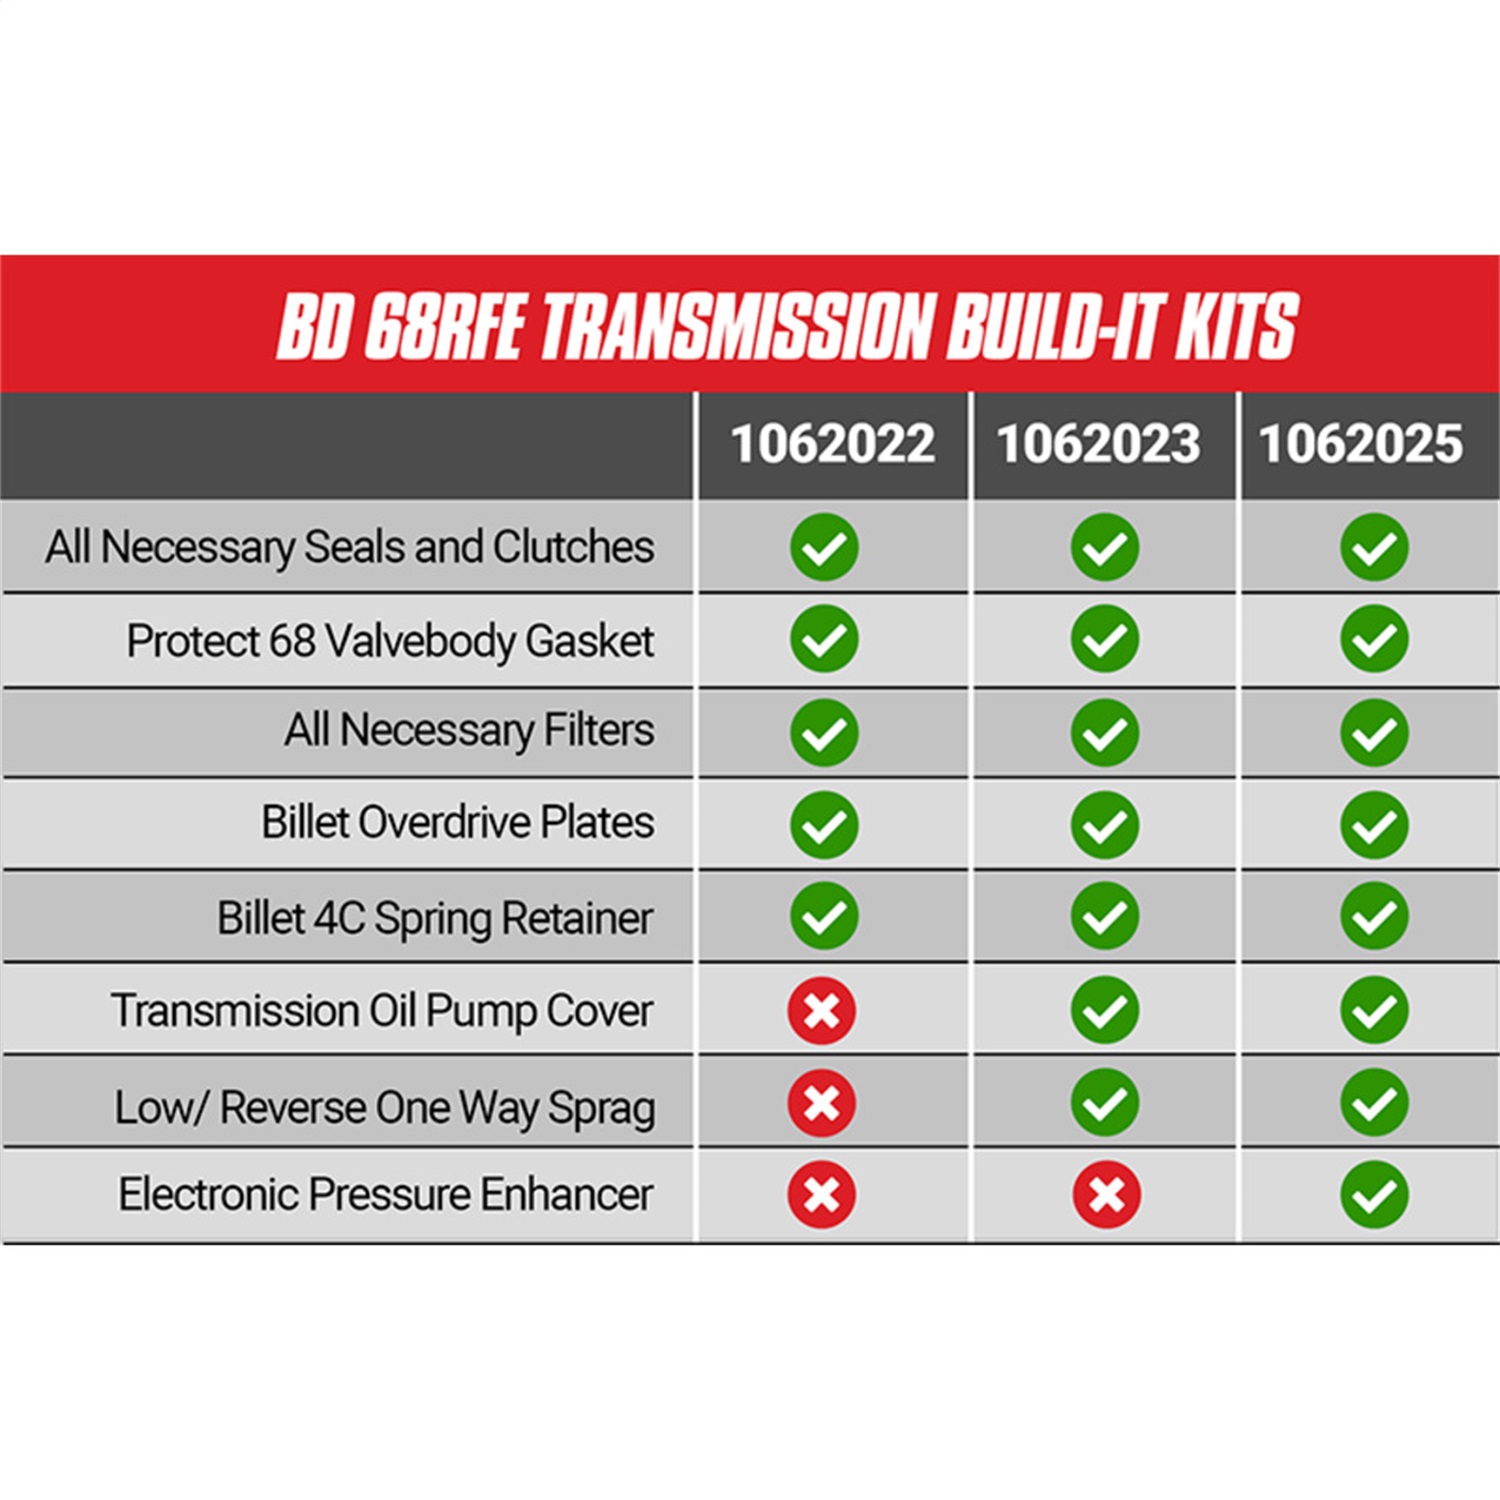 BD Diesel 1062023 Stage 3 Performance Build-It Transmission Kit